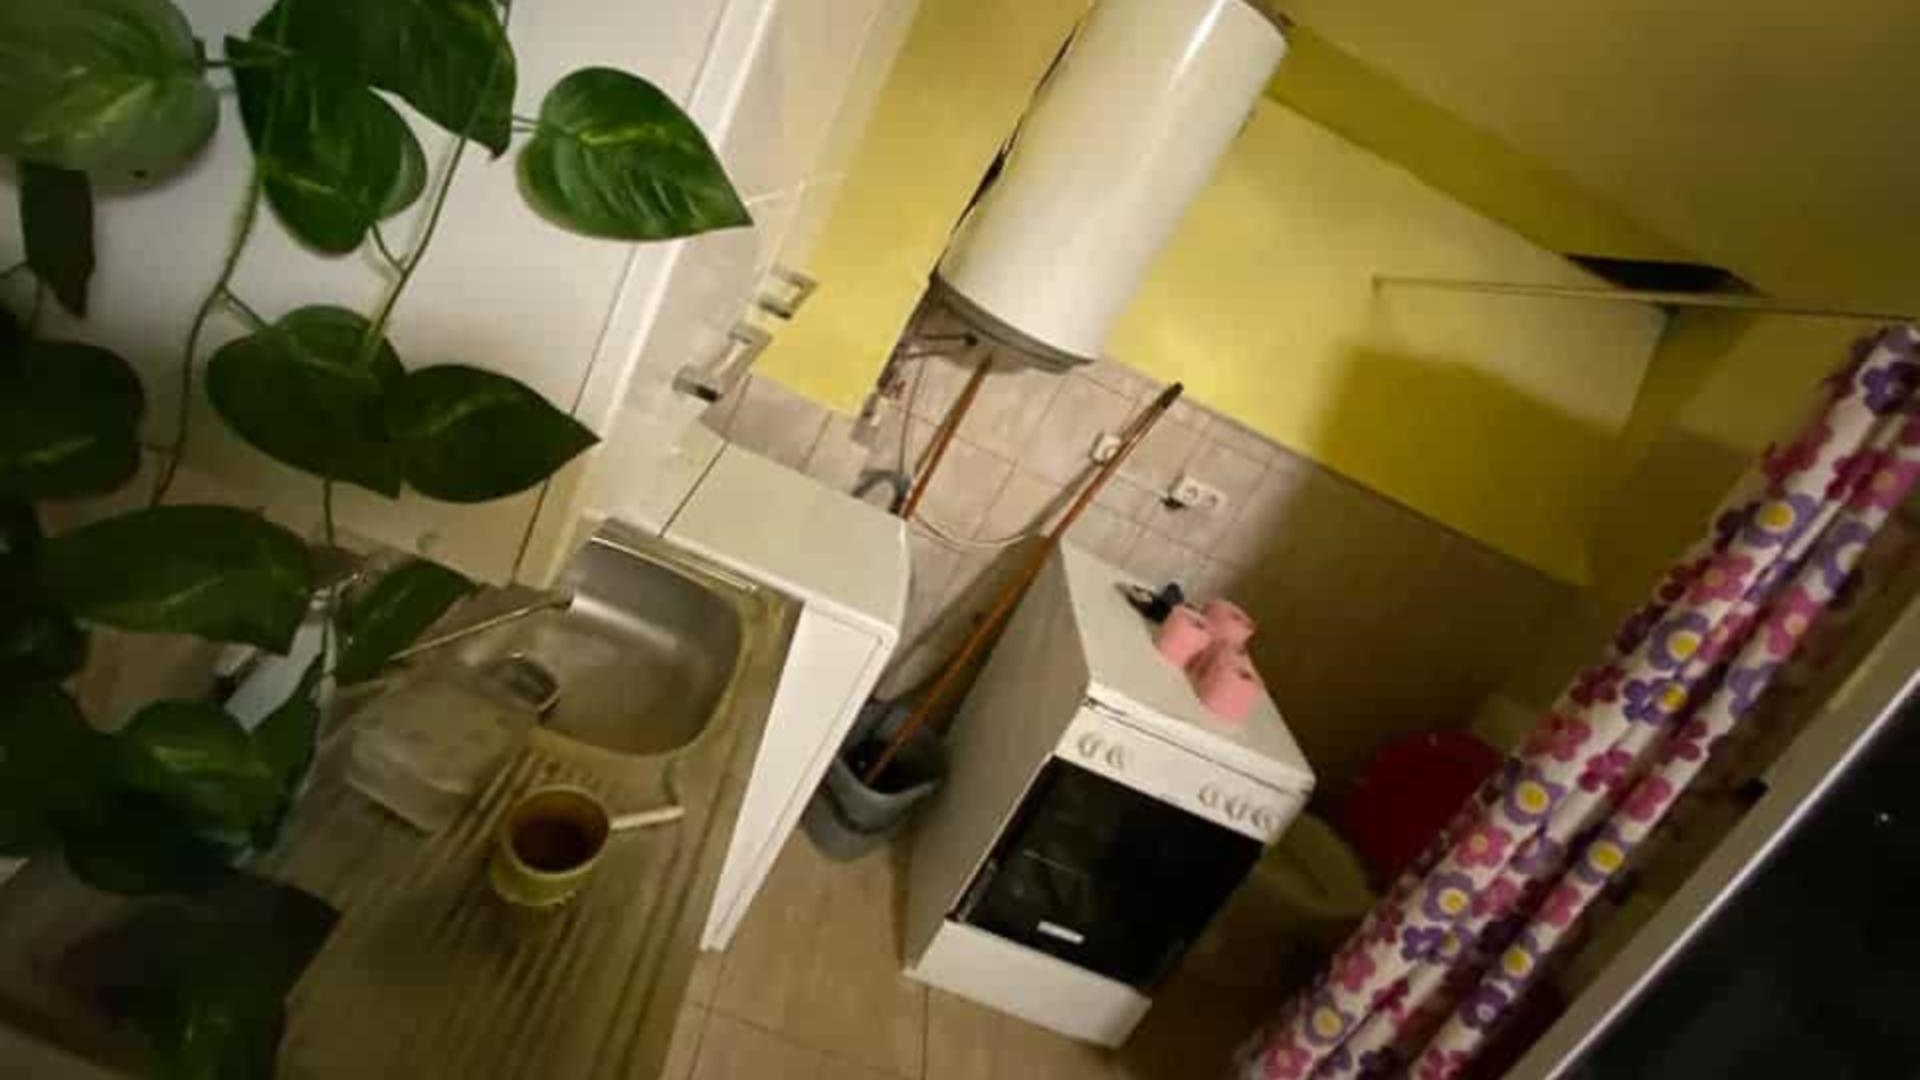 Așa-zisa garsonieră are wc-ul lipit de aragaz. Foto: Cluj24